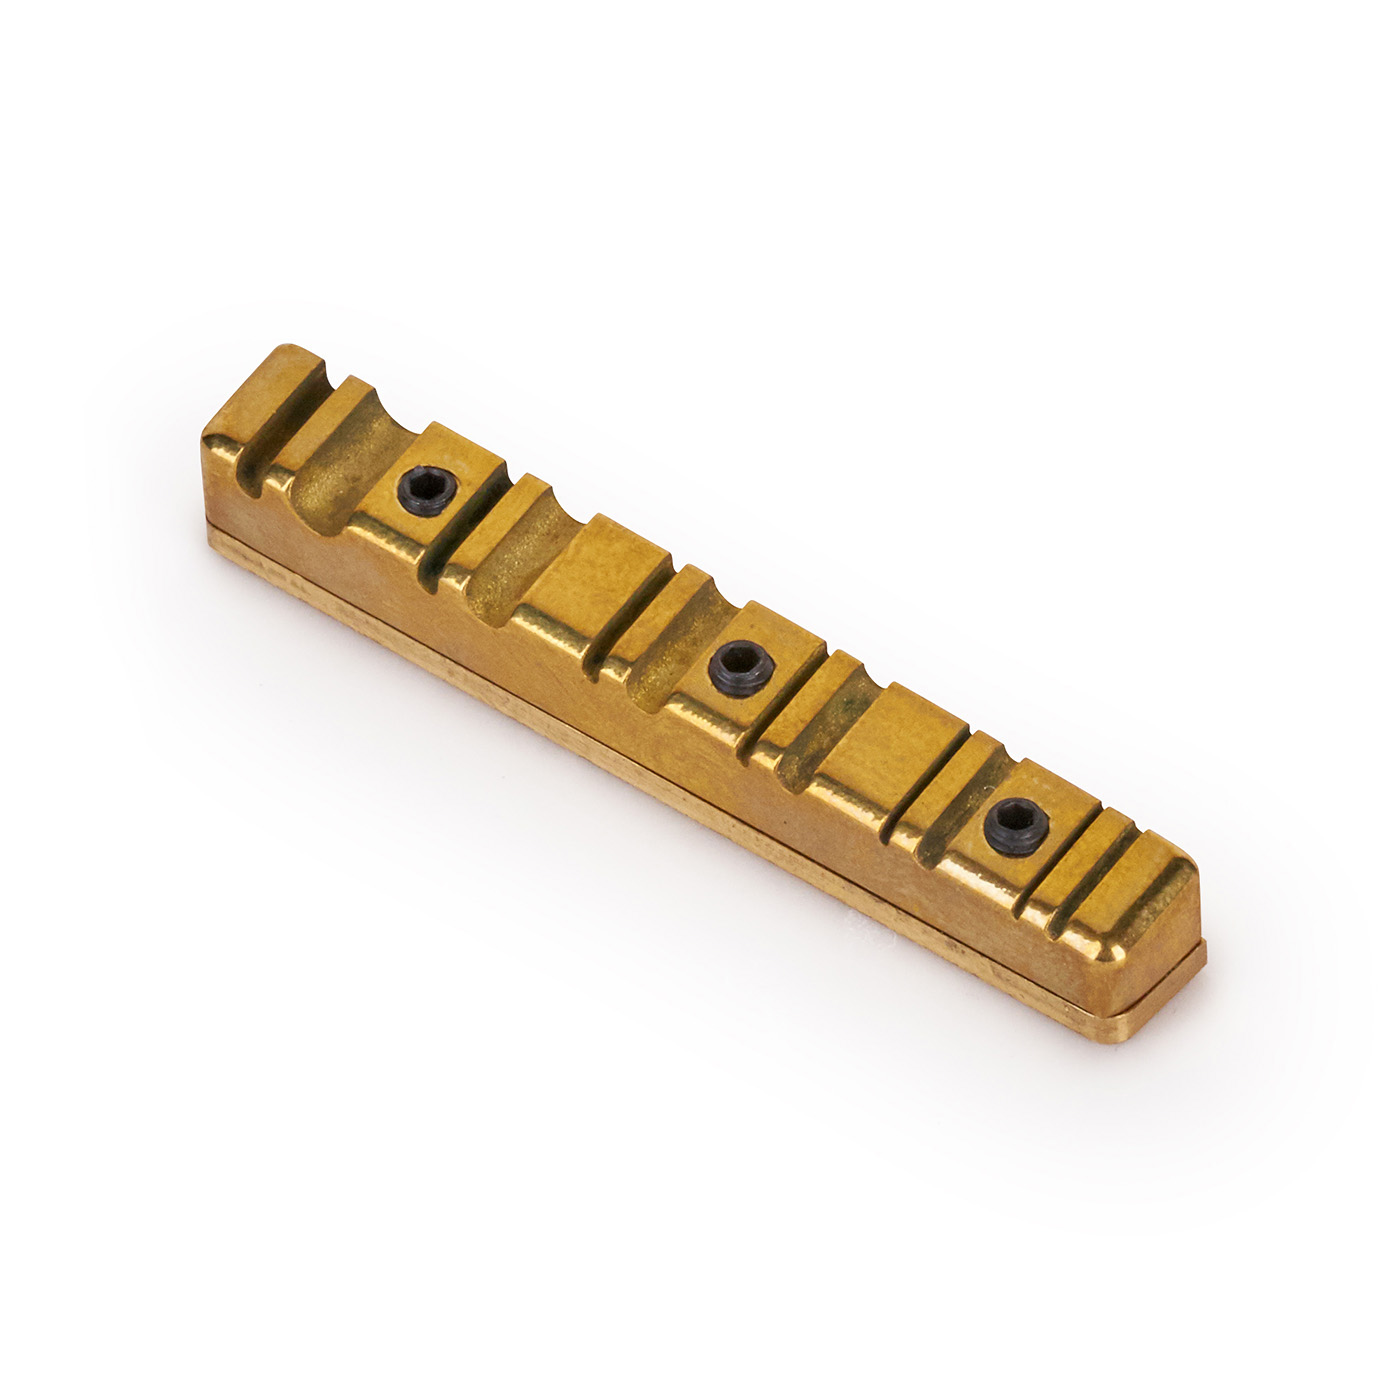 Warwick Parts - Just-A-Nut III, 12-String, Lefthand, 55 mm width - Brass